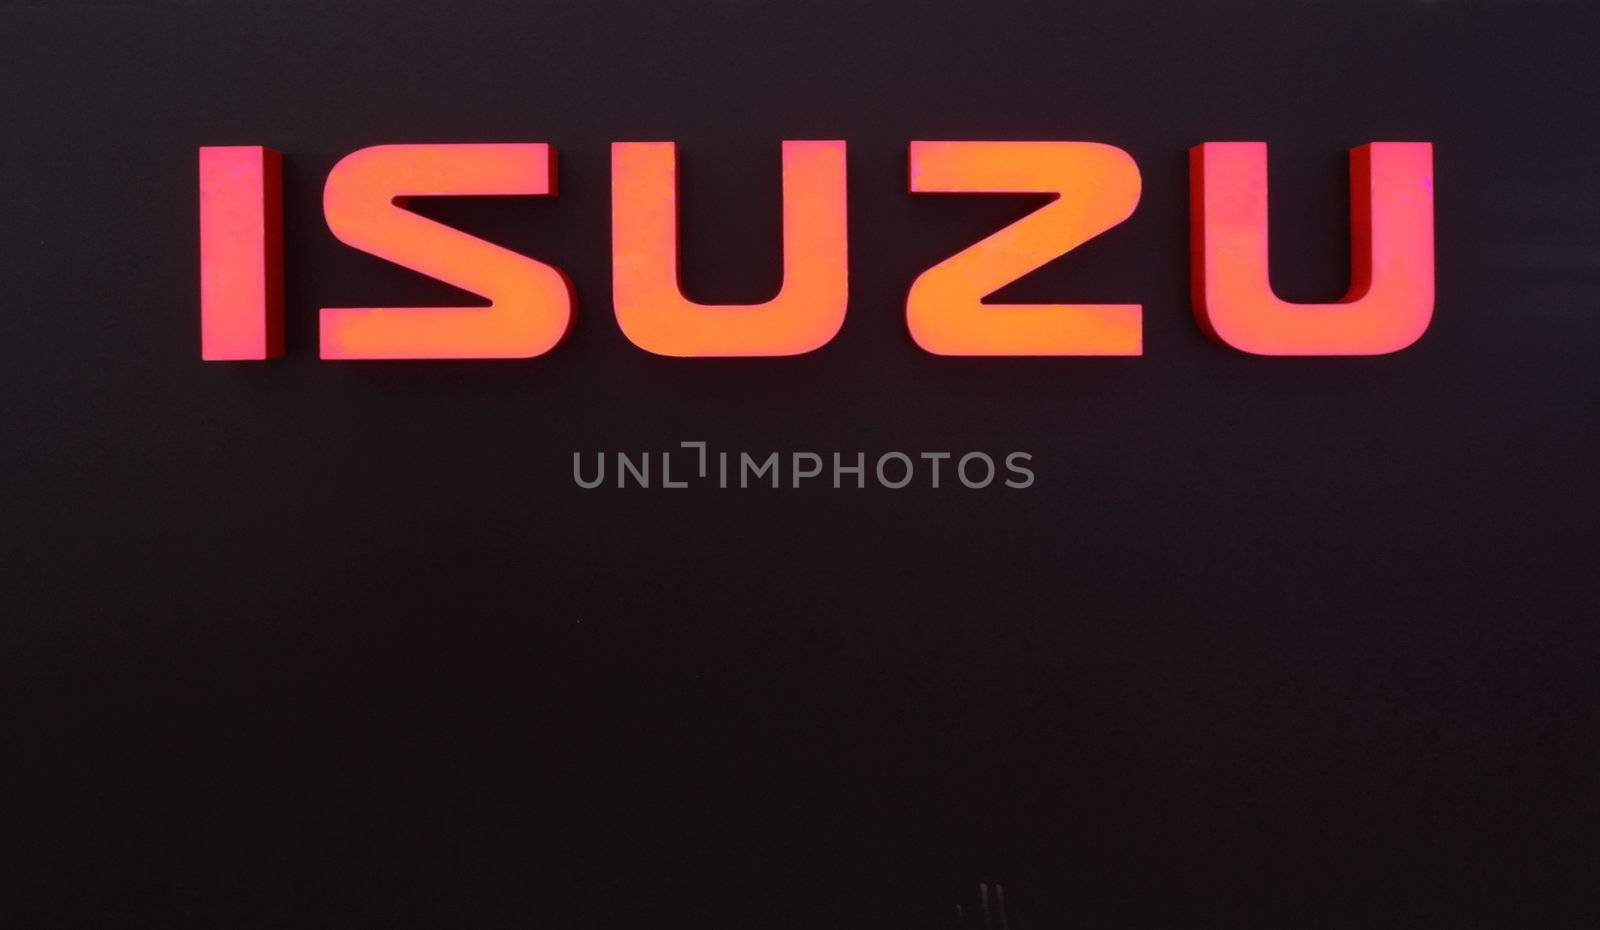 Isuzu logo by Elenaphotos21